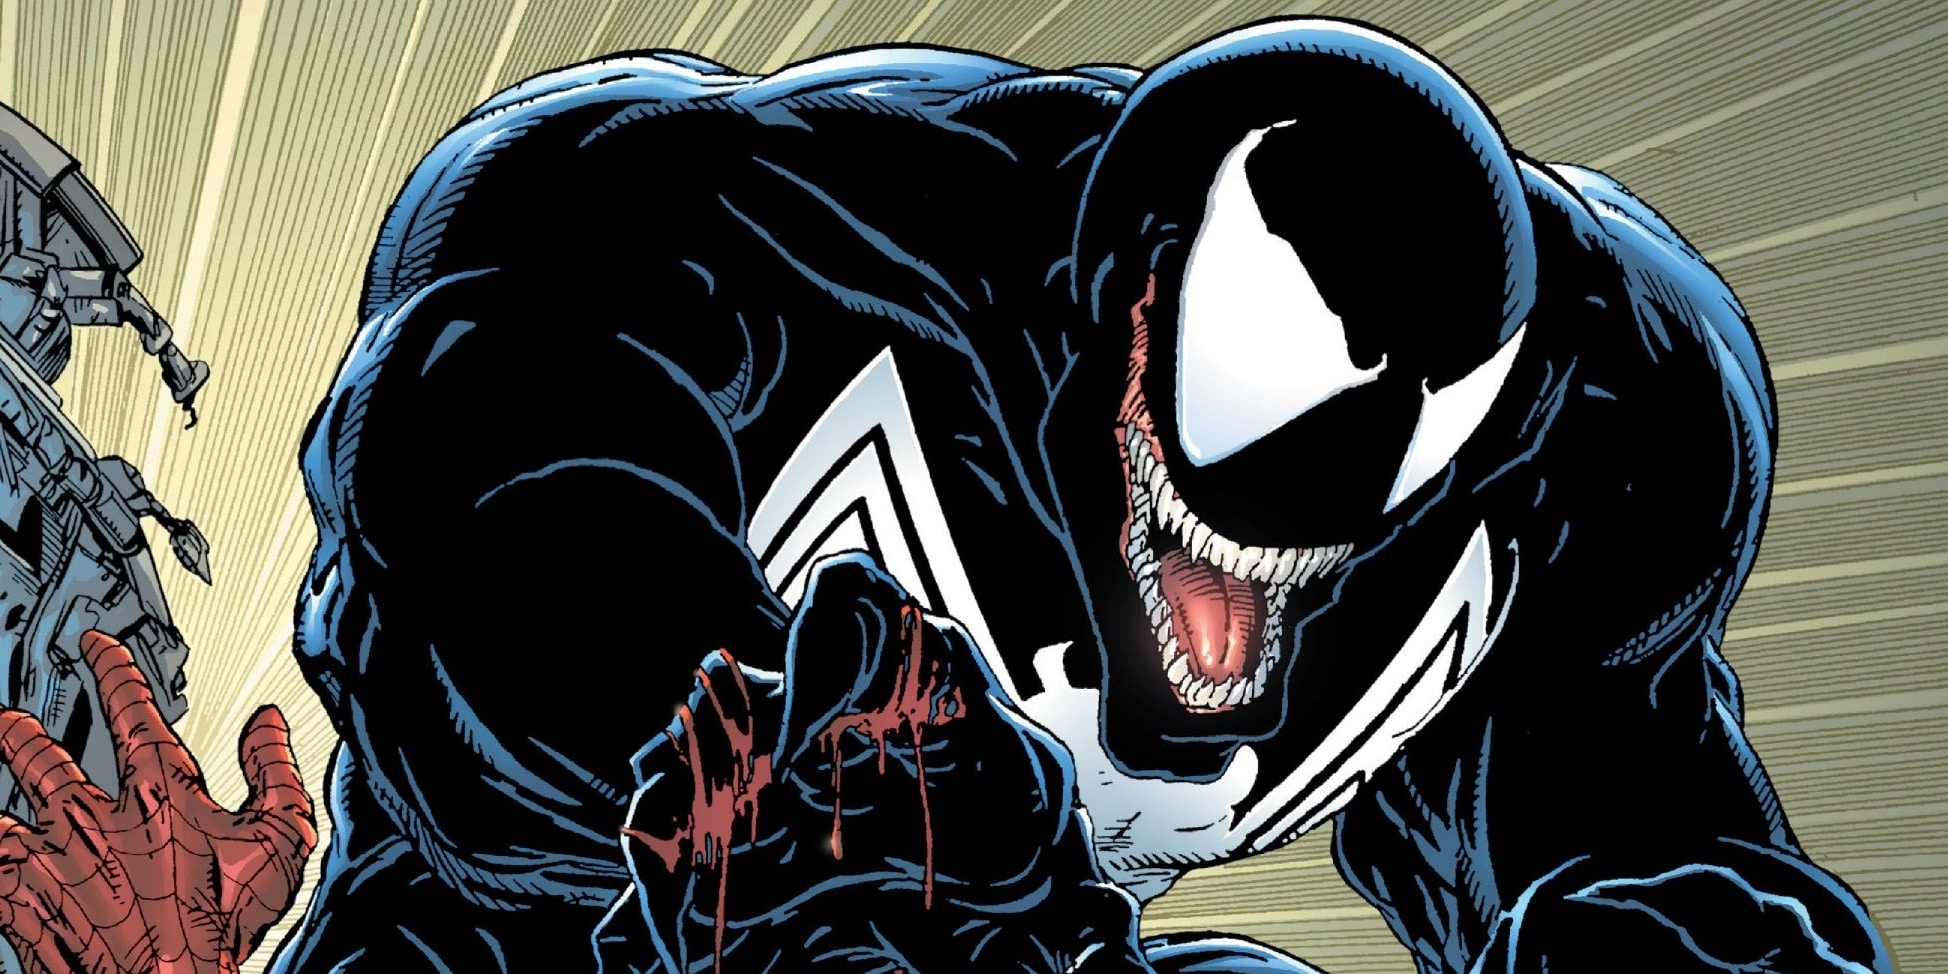 Chequea este teaser trailer de la película de Venom